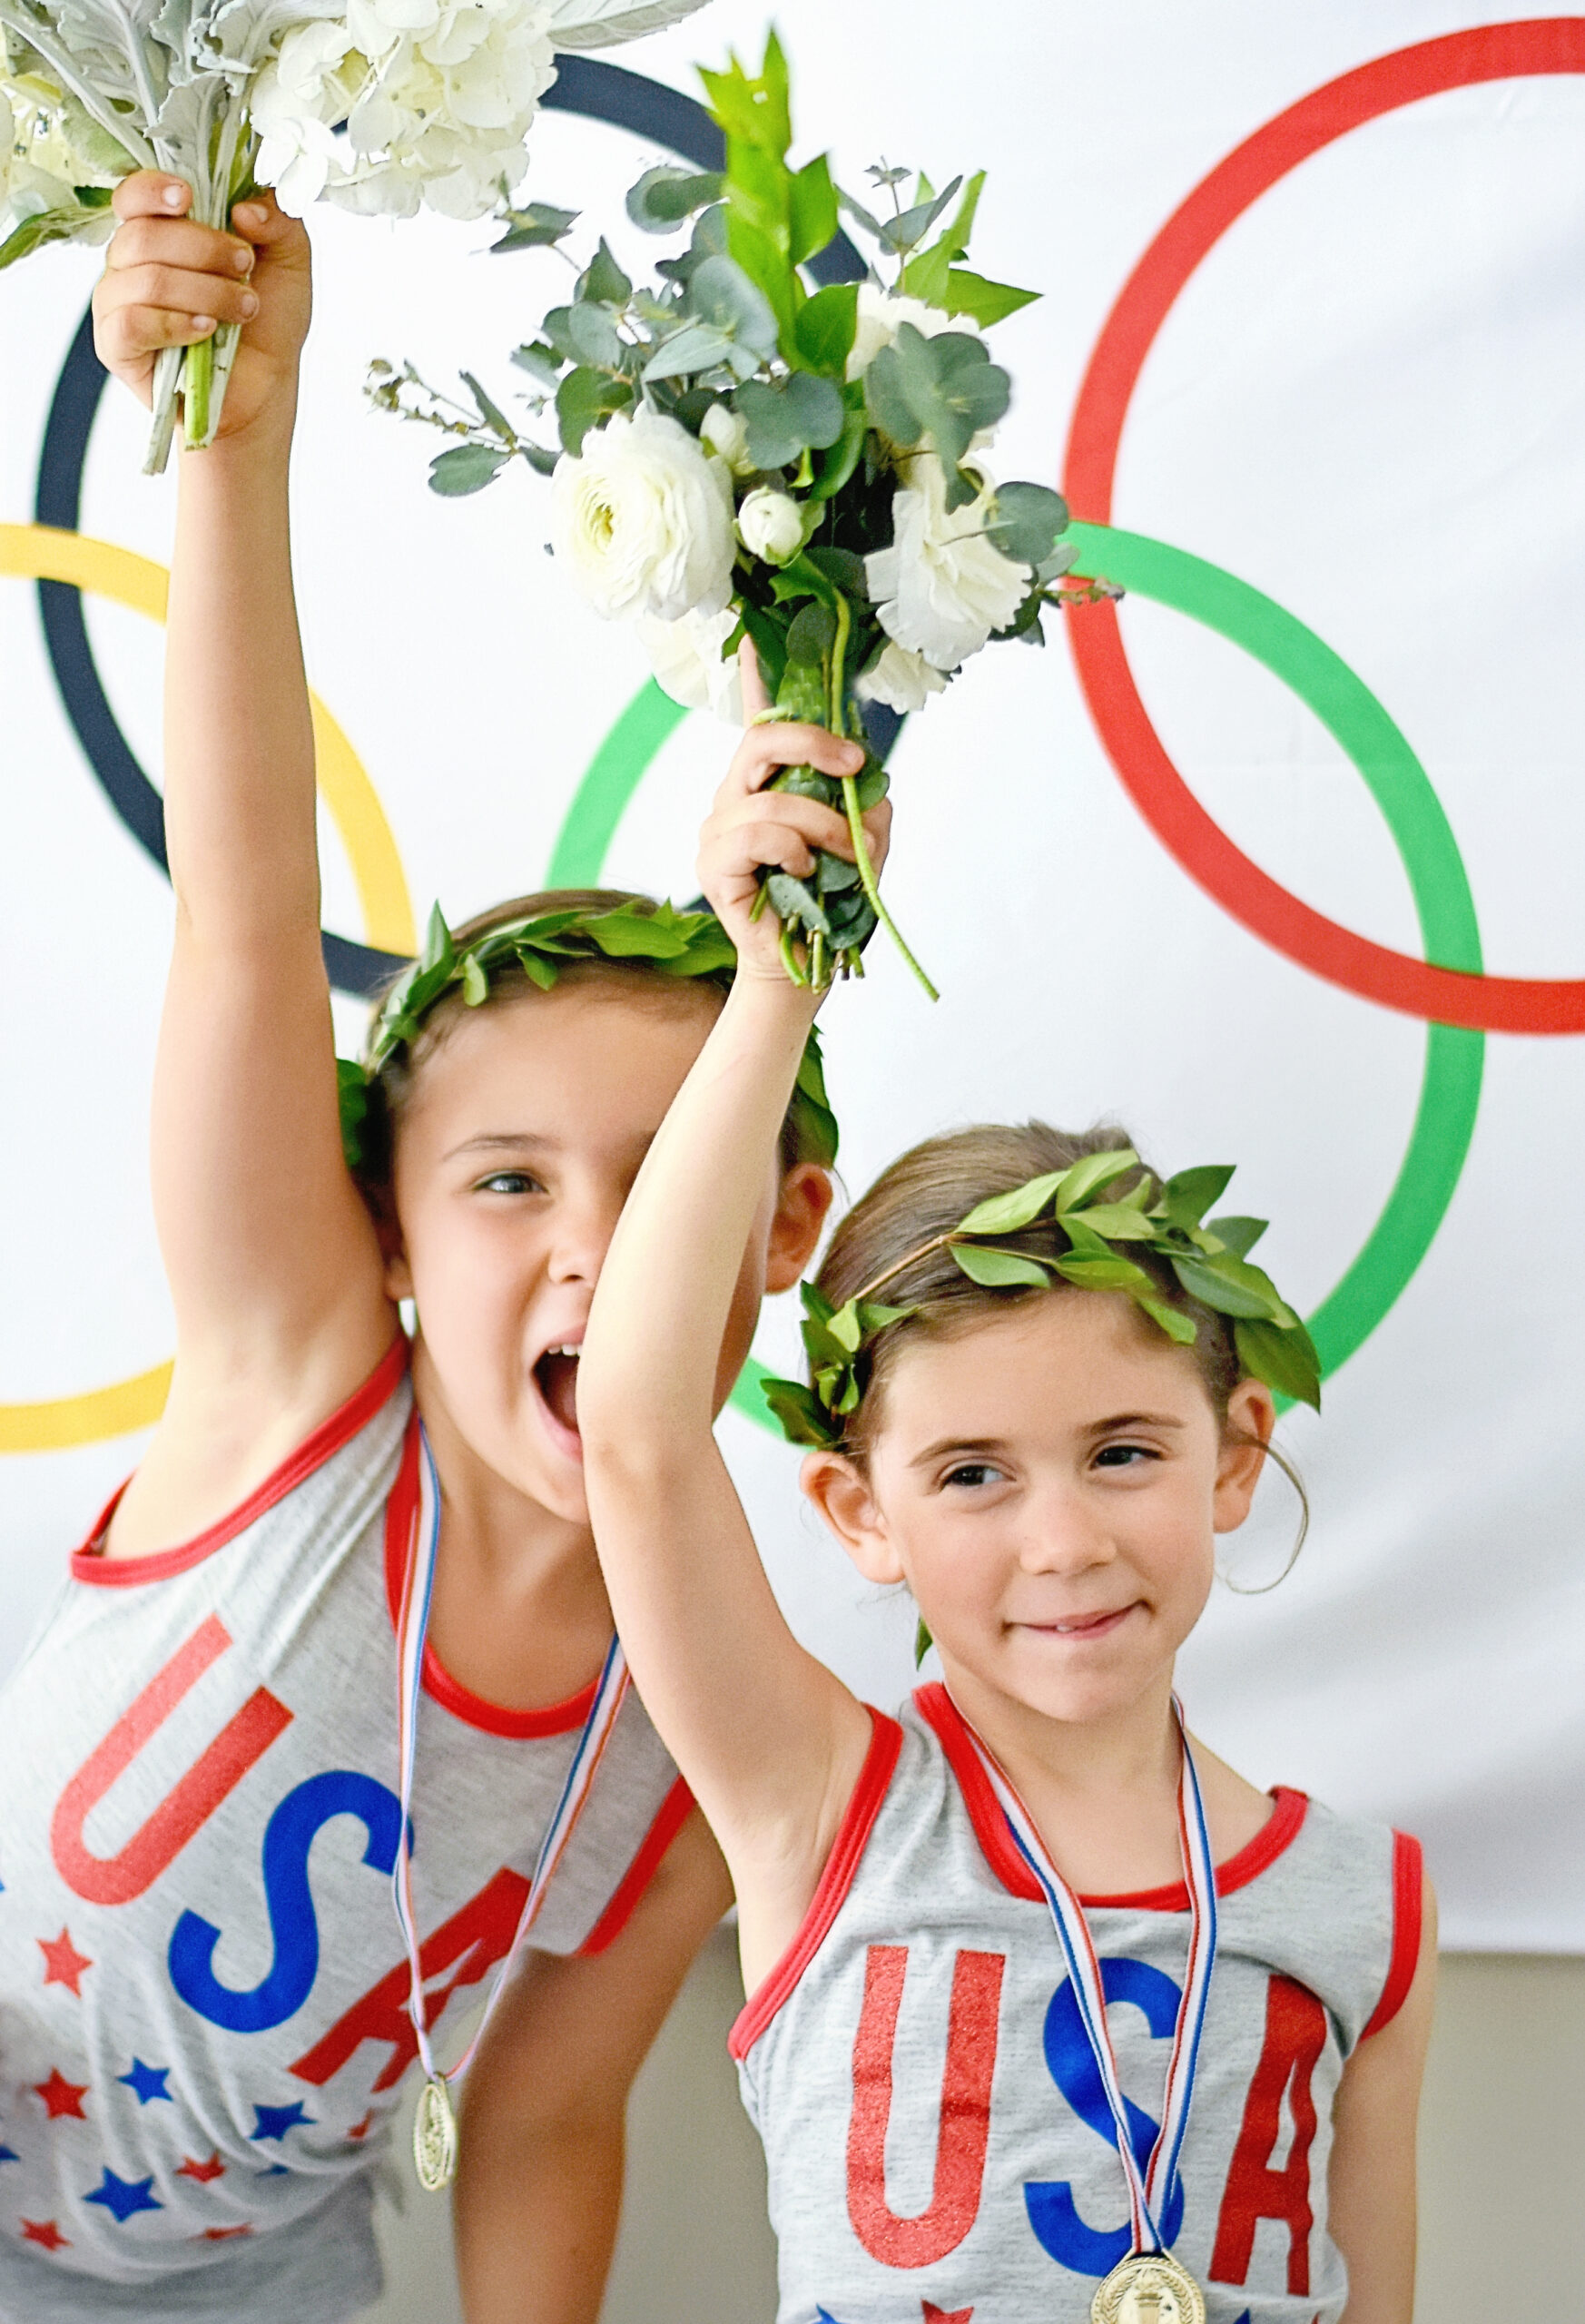 Mini Olympics for kids